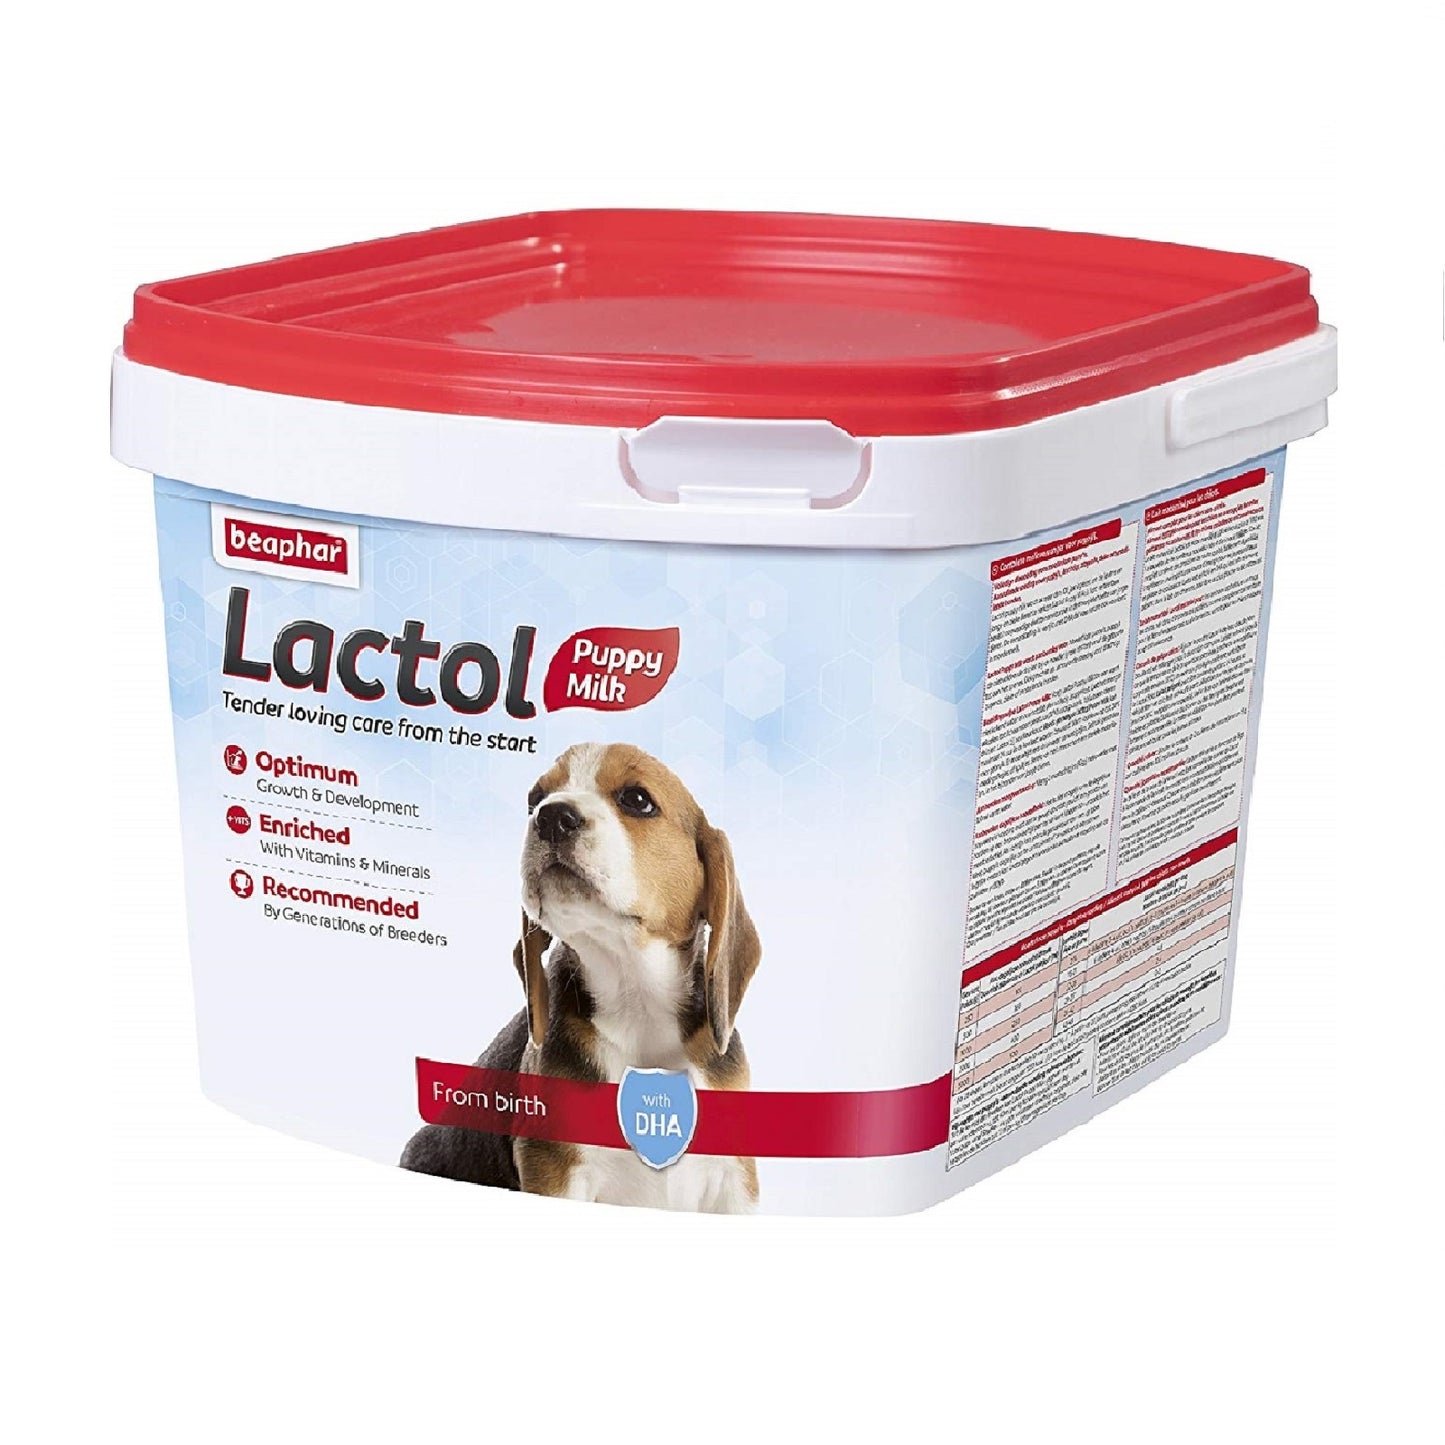 Beaphar - Lactol Puppy Milk